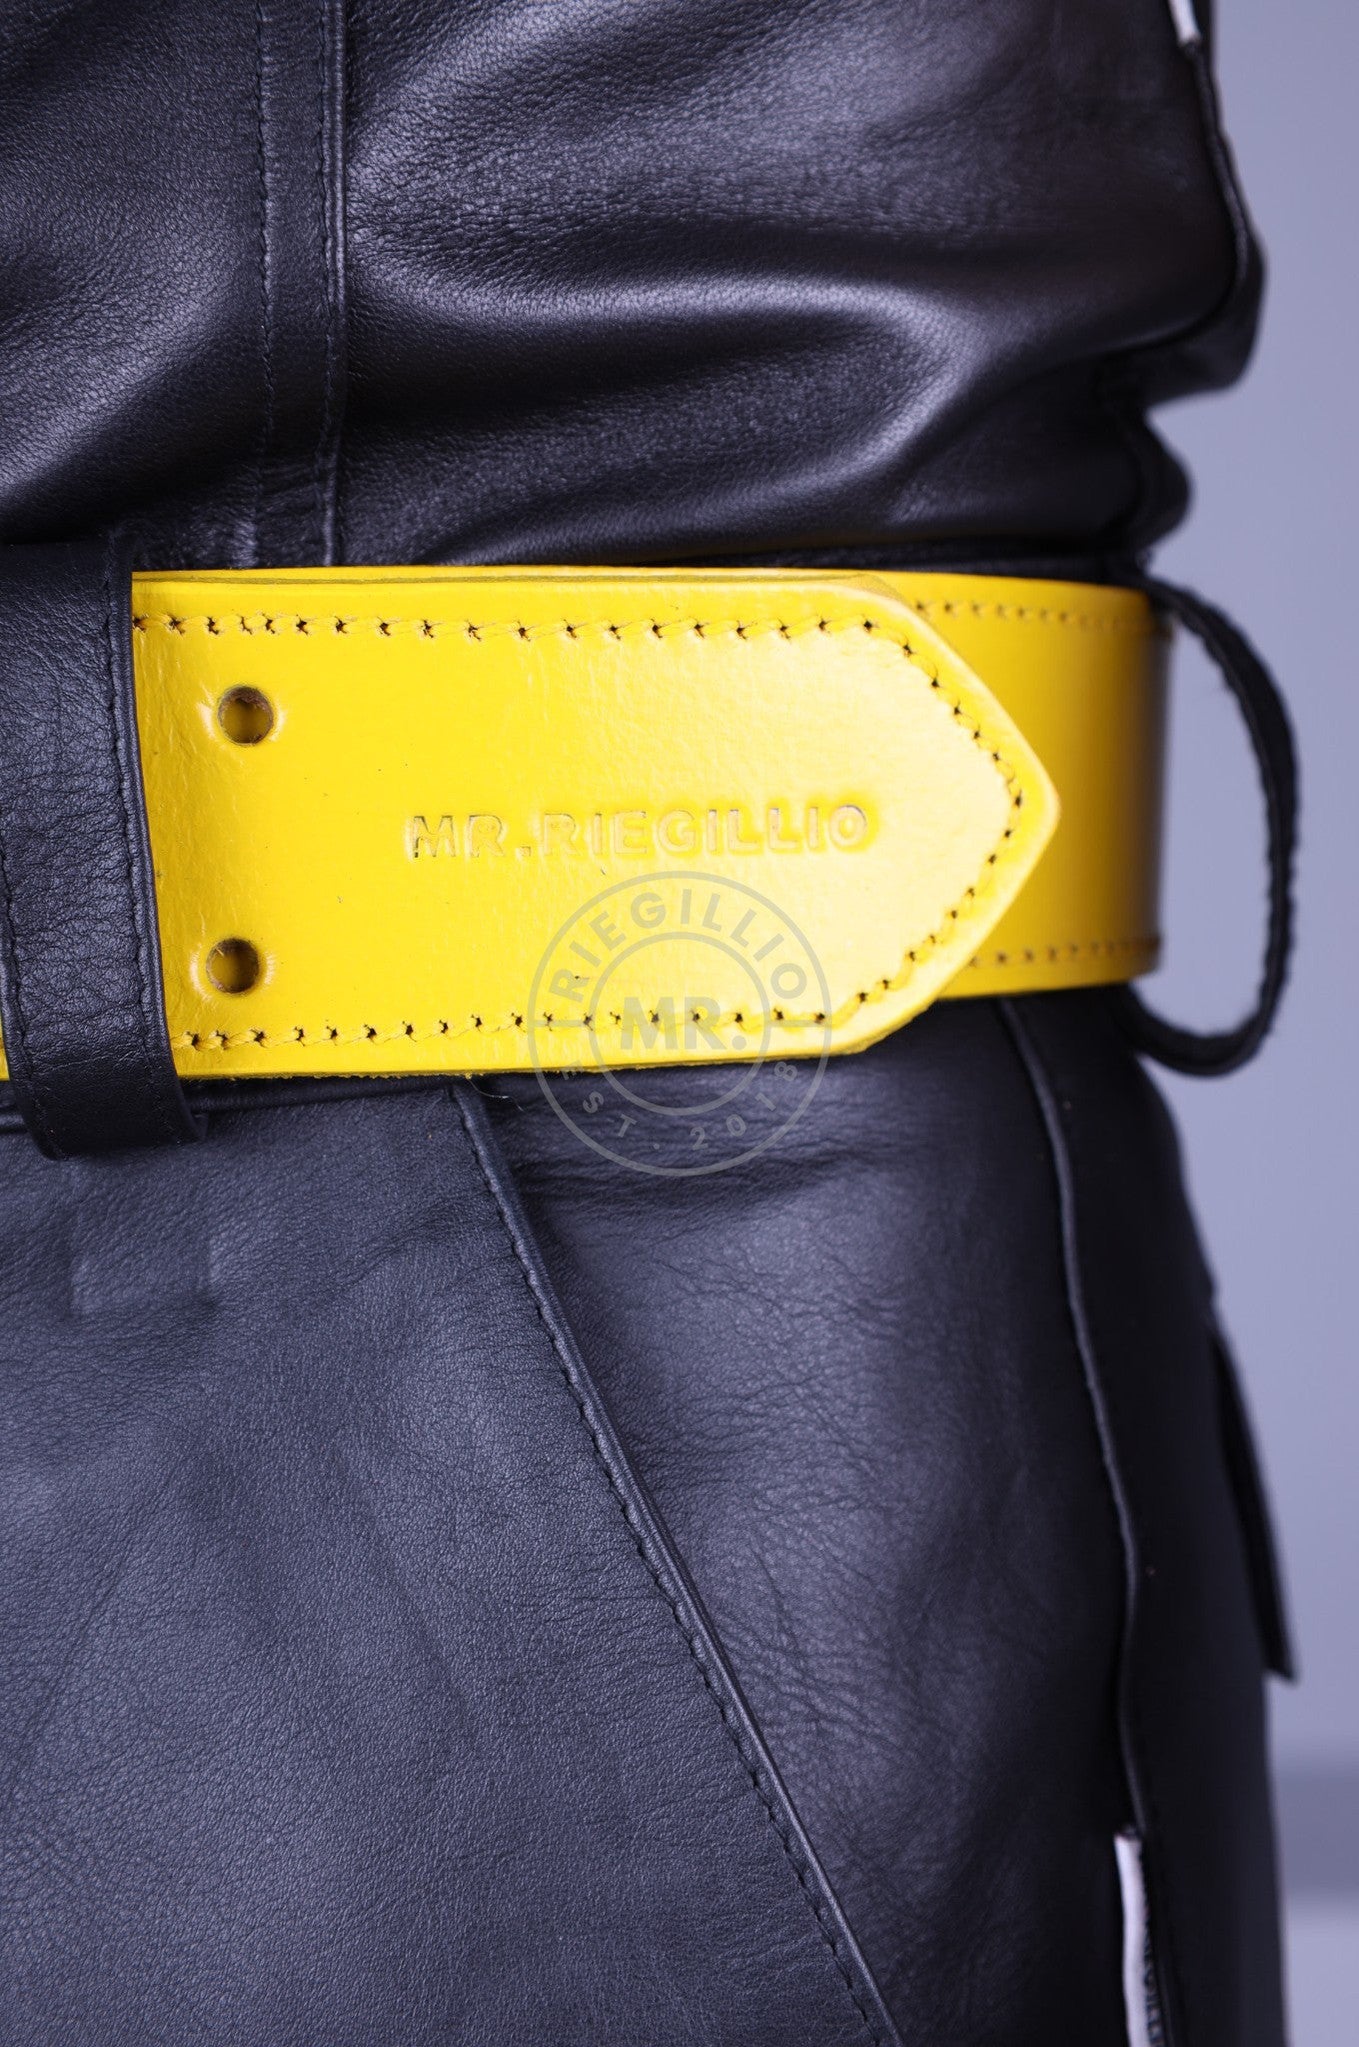 Yellow Leather Belt at MR. Riegillio